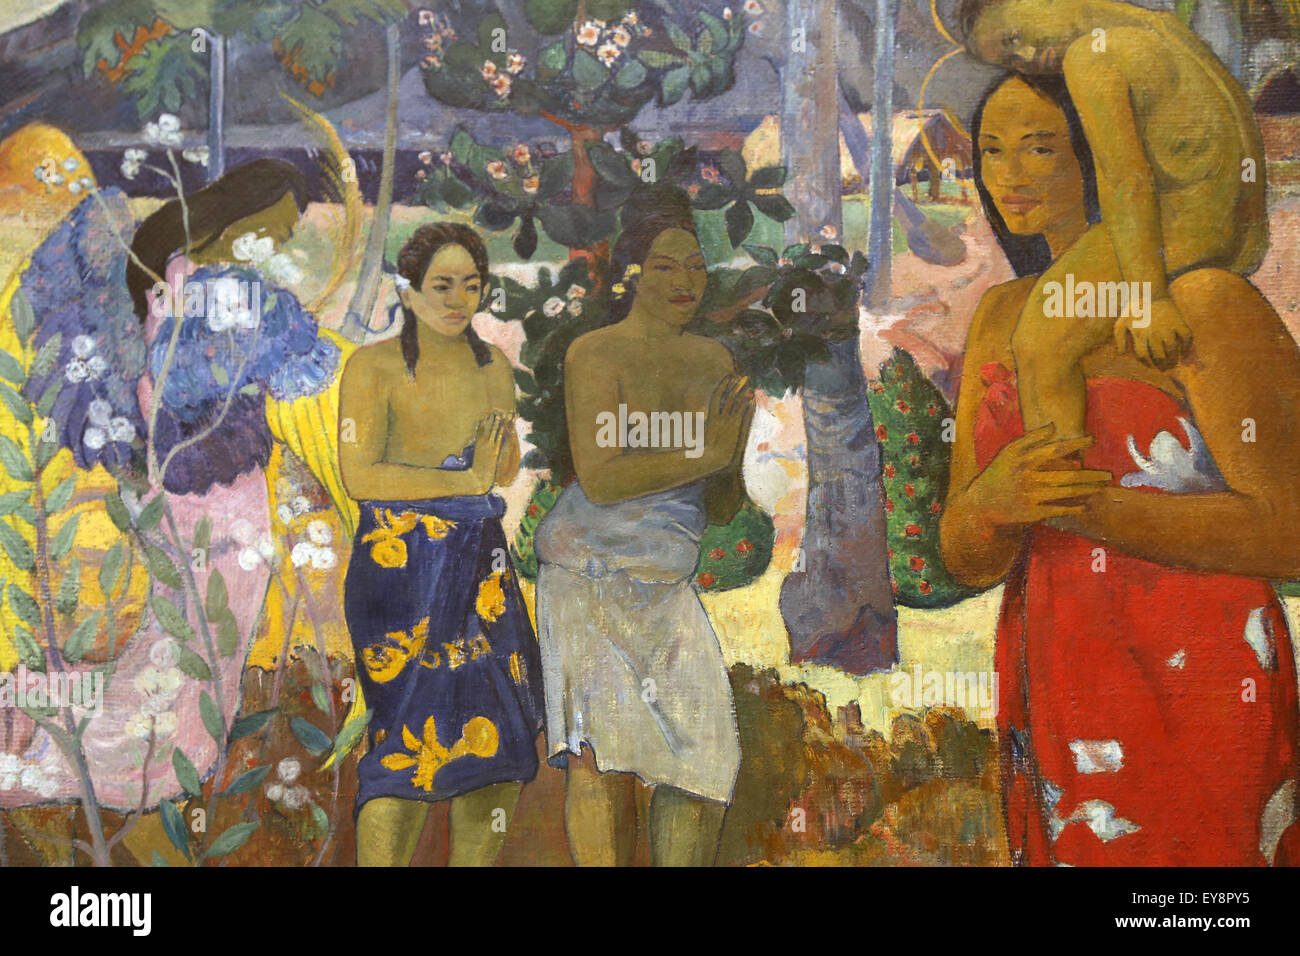 Paul Gauguin (1848-1903). Französischer Maler. IA Orana Maria (Gegrüßet seist du Maria), 1891. Öl auf Leinwand. Metropolitan Museum of Art. NY. USA. Stockfoto